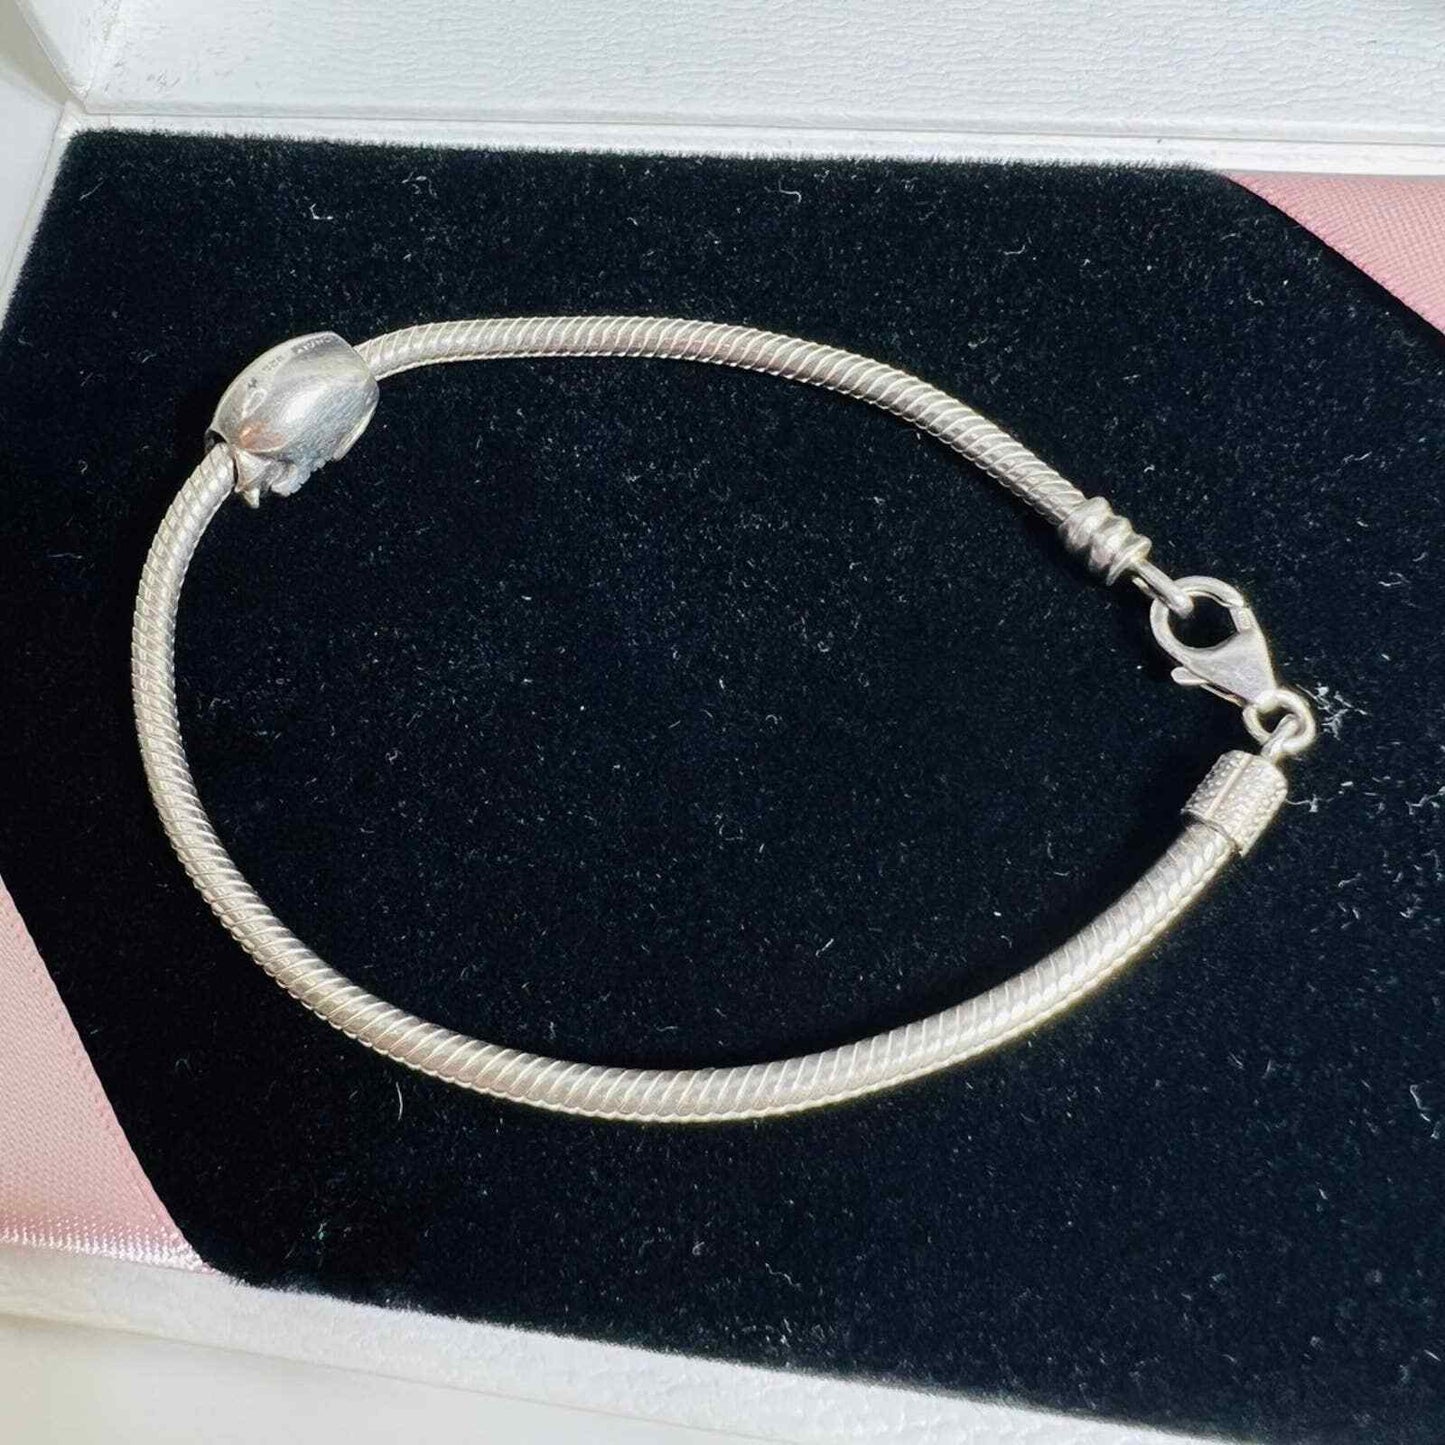 Chamillia Women's Jewelry Bracelet Sterling Silver Sleeping Cat Charm Metal 925